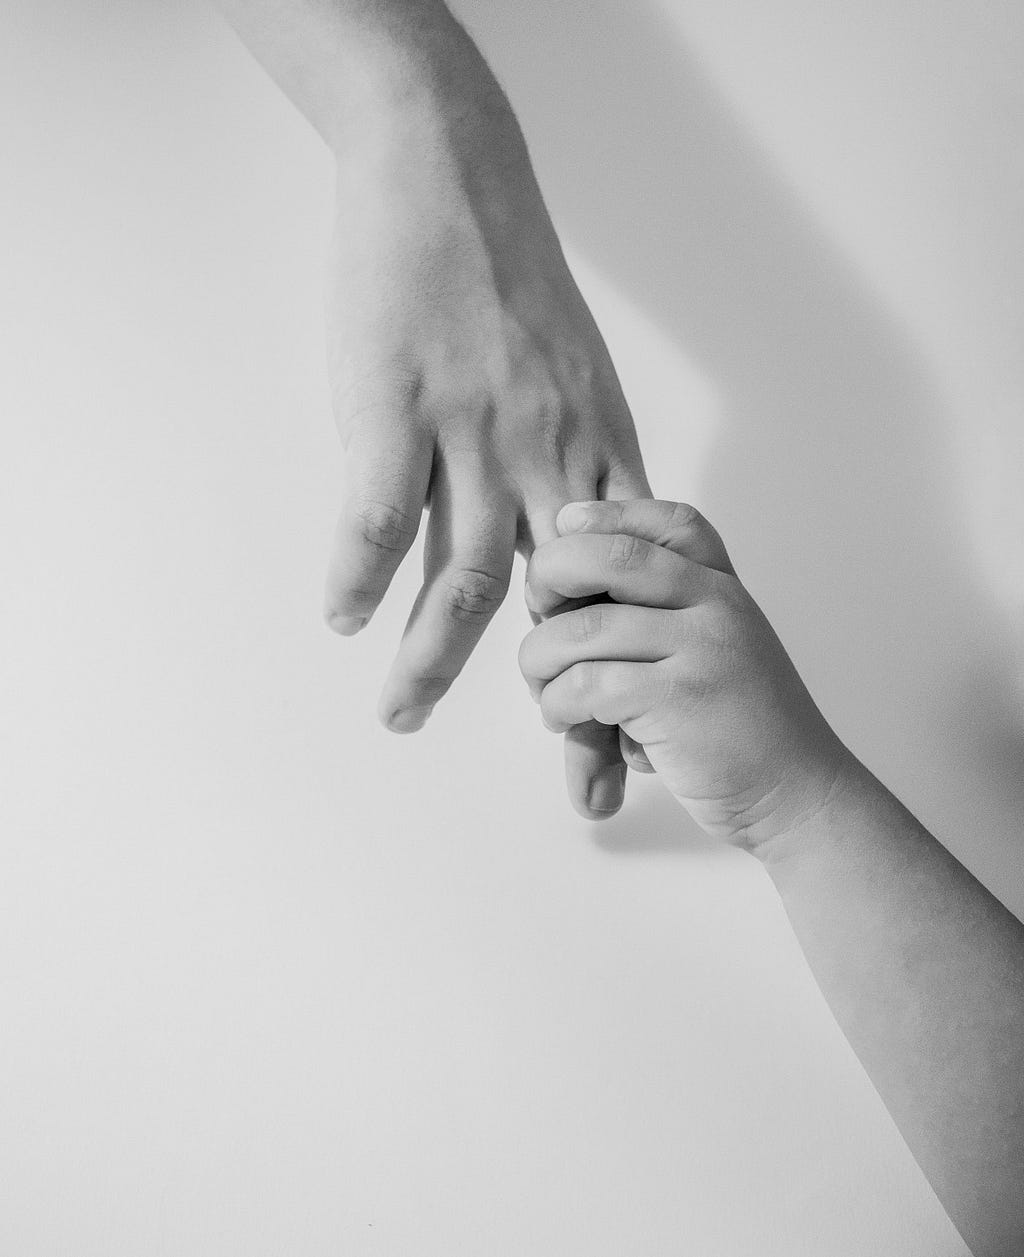 holding hands trust